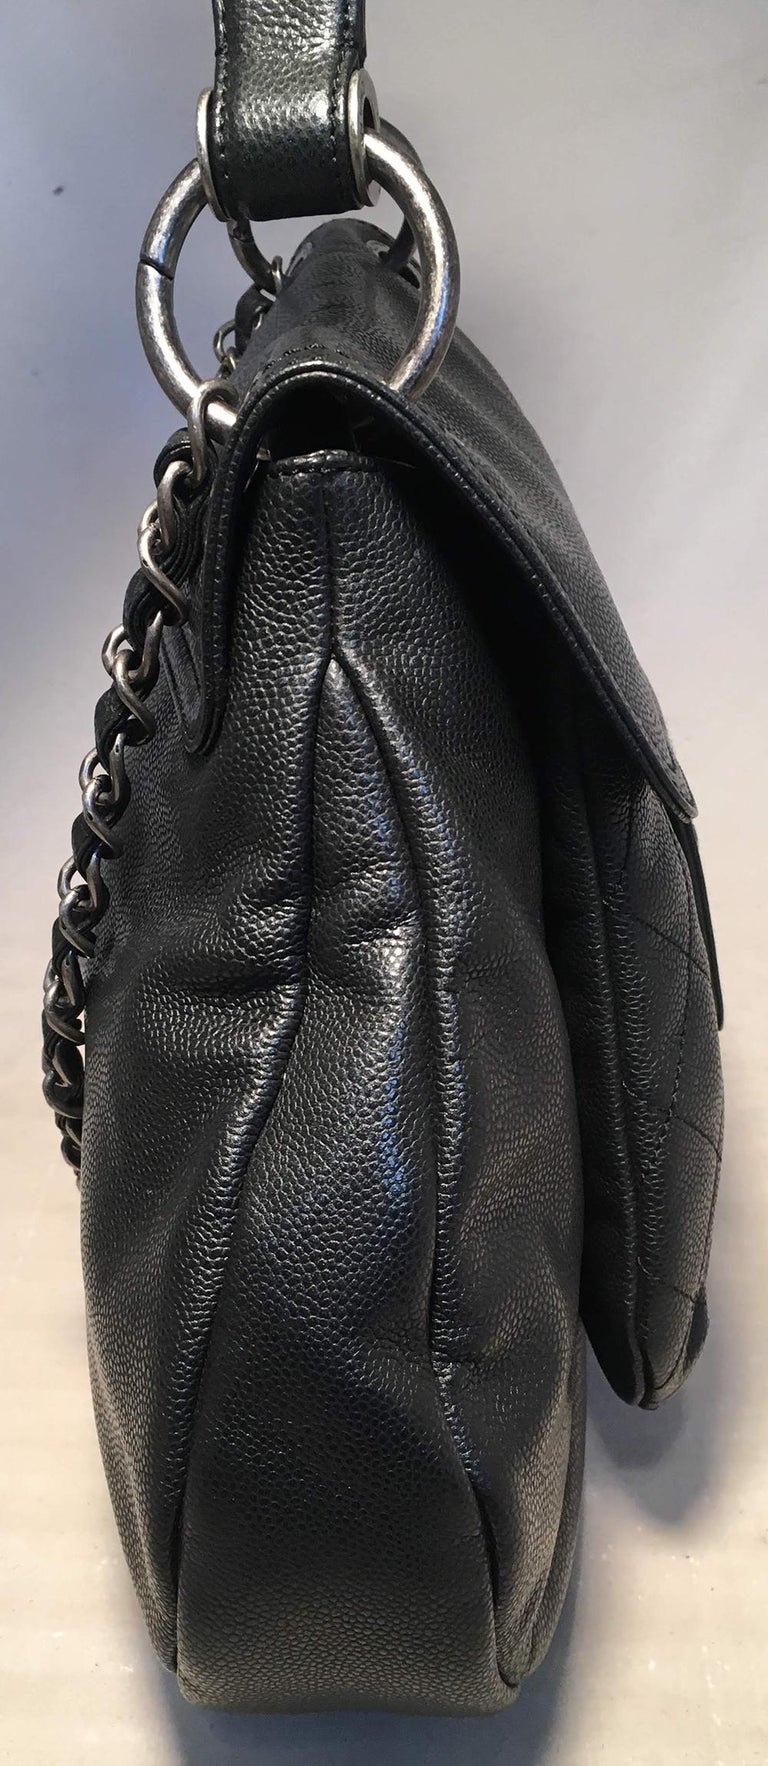 Chanel Black Leather Double Strap Shoulder Bag Tote Production Sample For Sale at 1stdibs